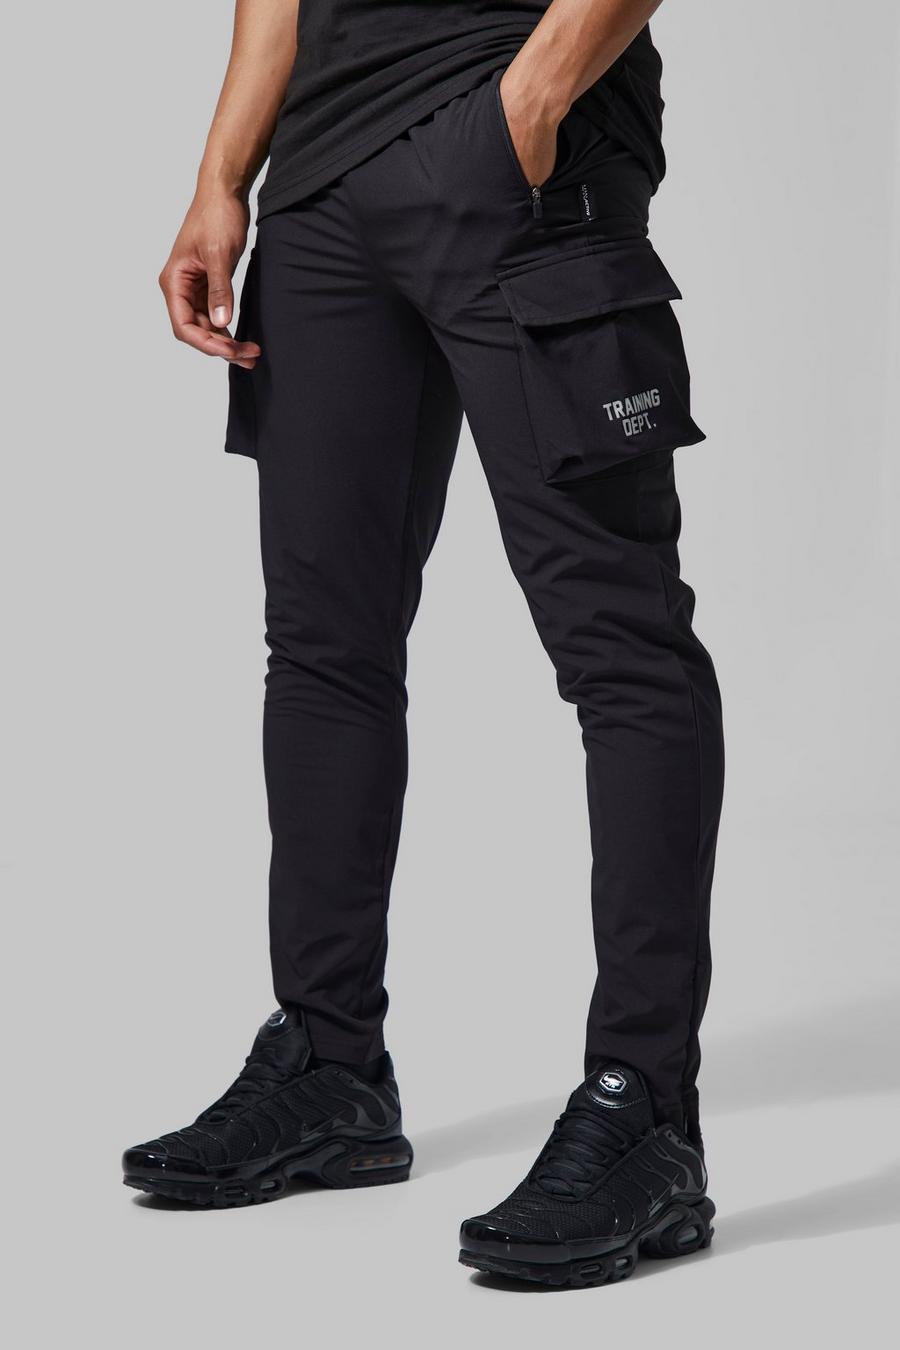 Pantaloni tuta Cargo Man Active per alta performance, Black image number 1